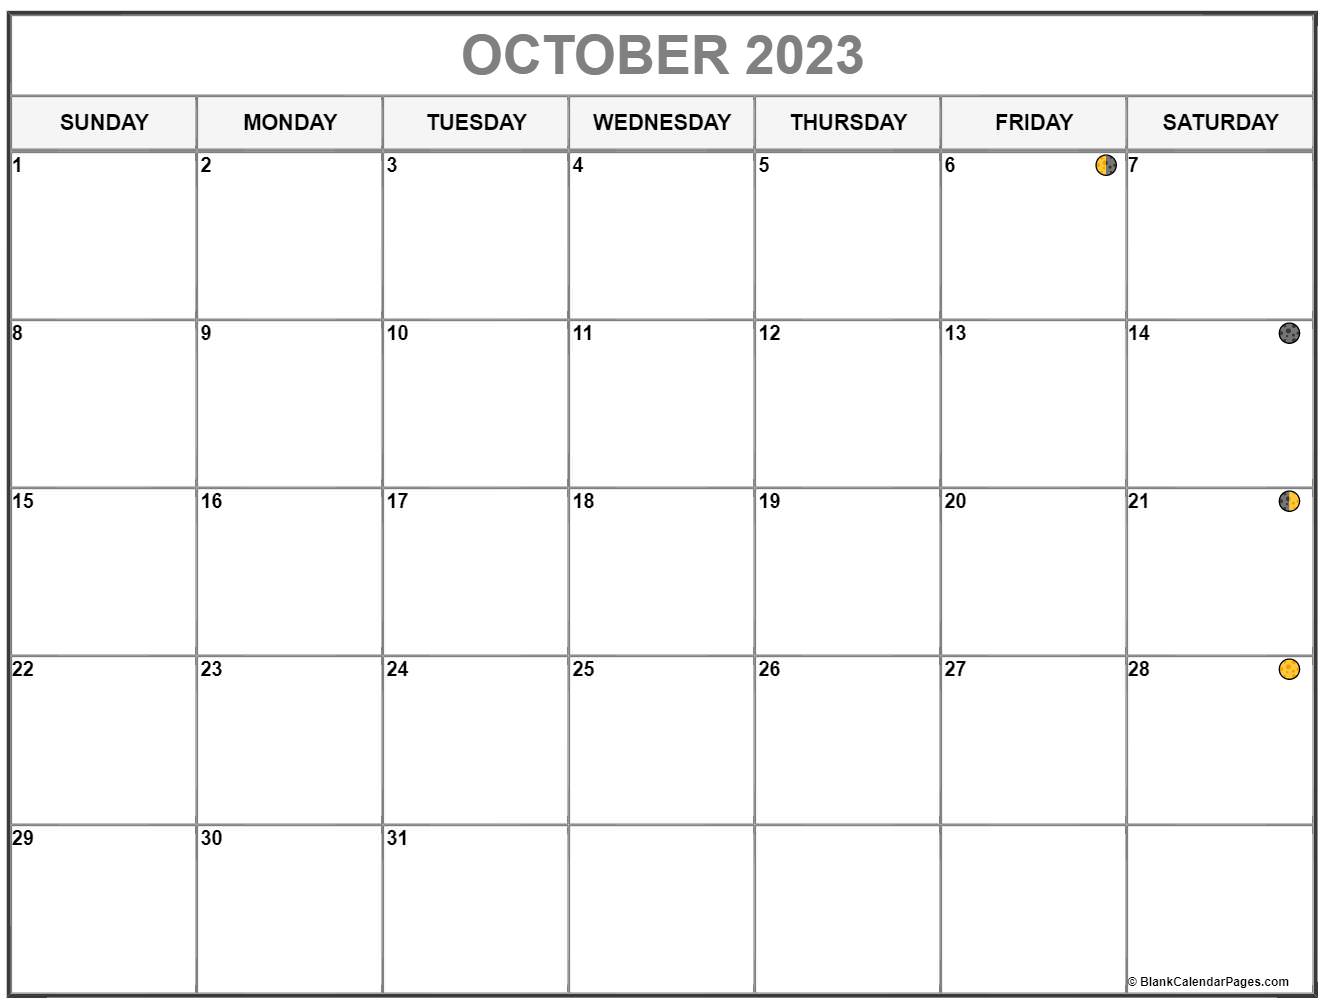 October 2023 Calendar Moon2 